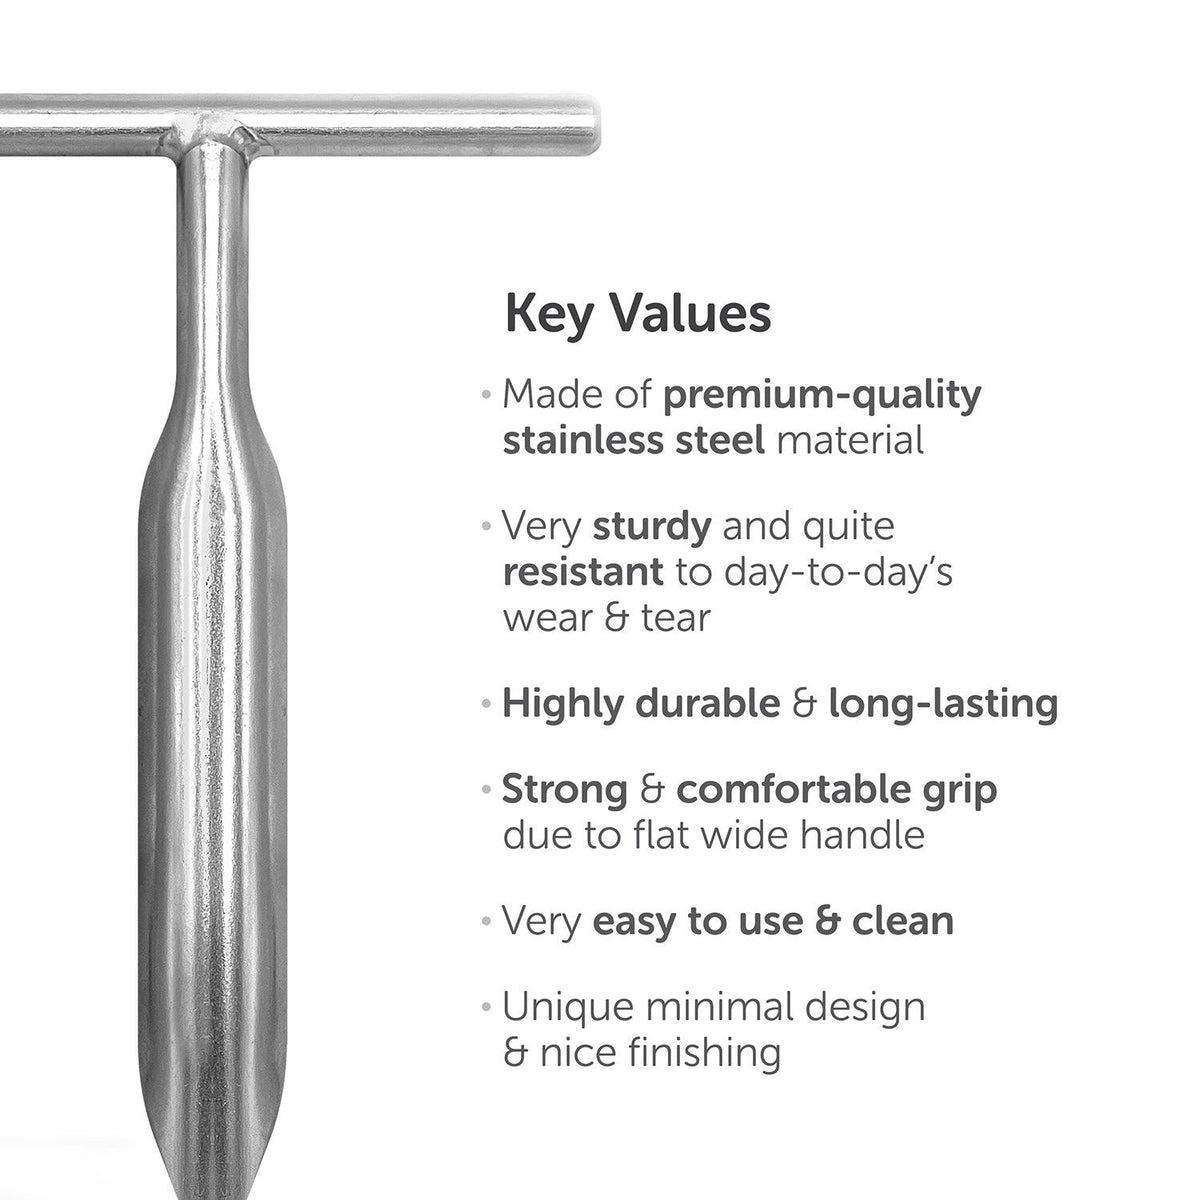 premuim quality steel, sturdy, long-lasting, easy to use, unique minimal design